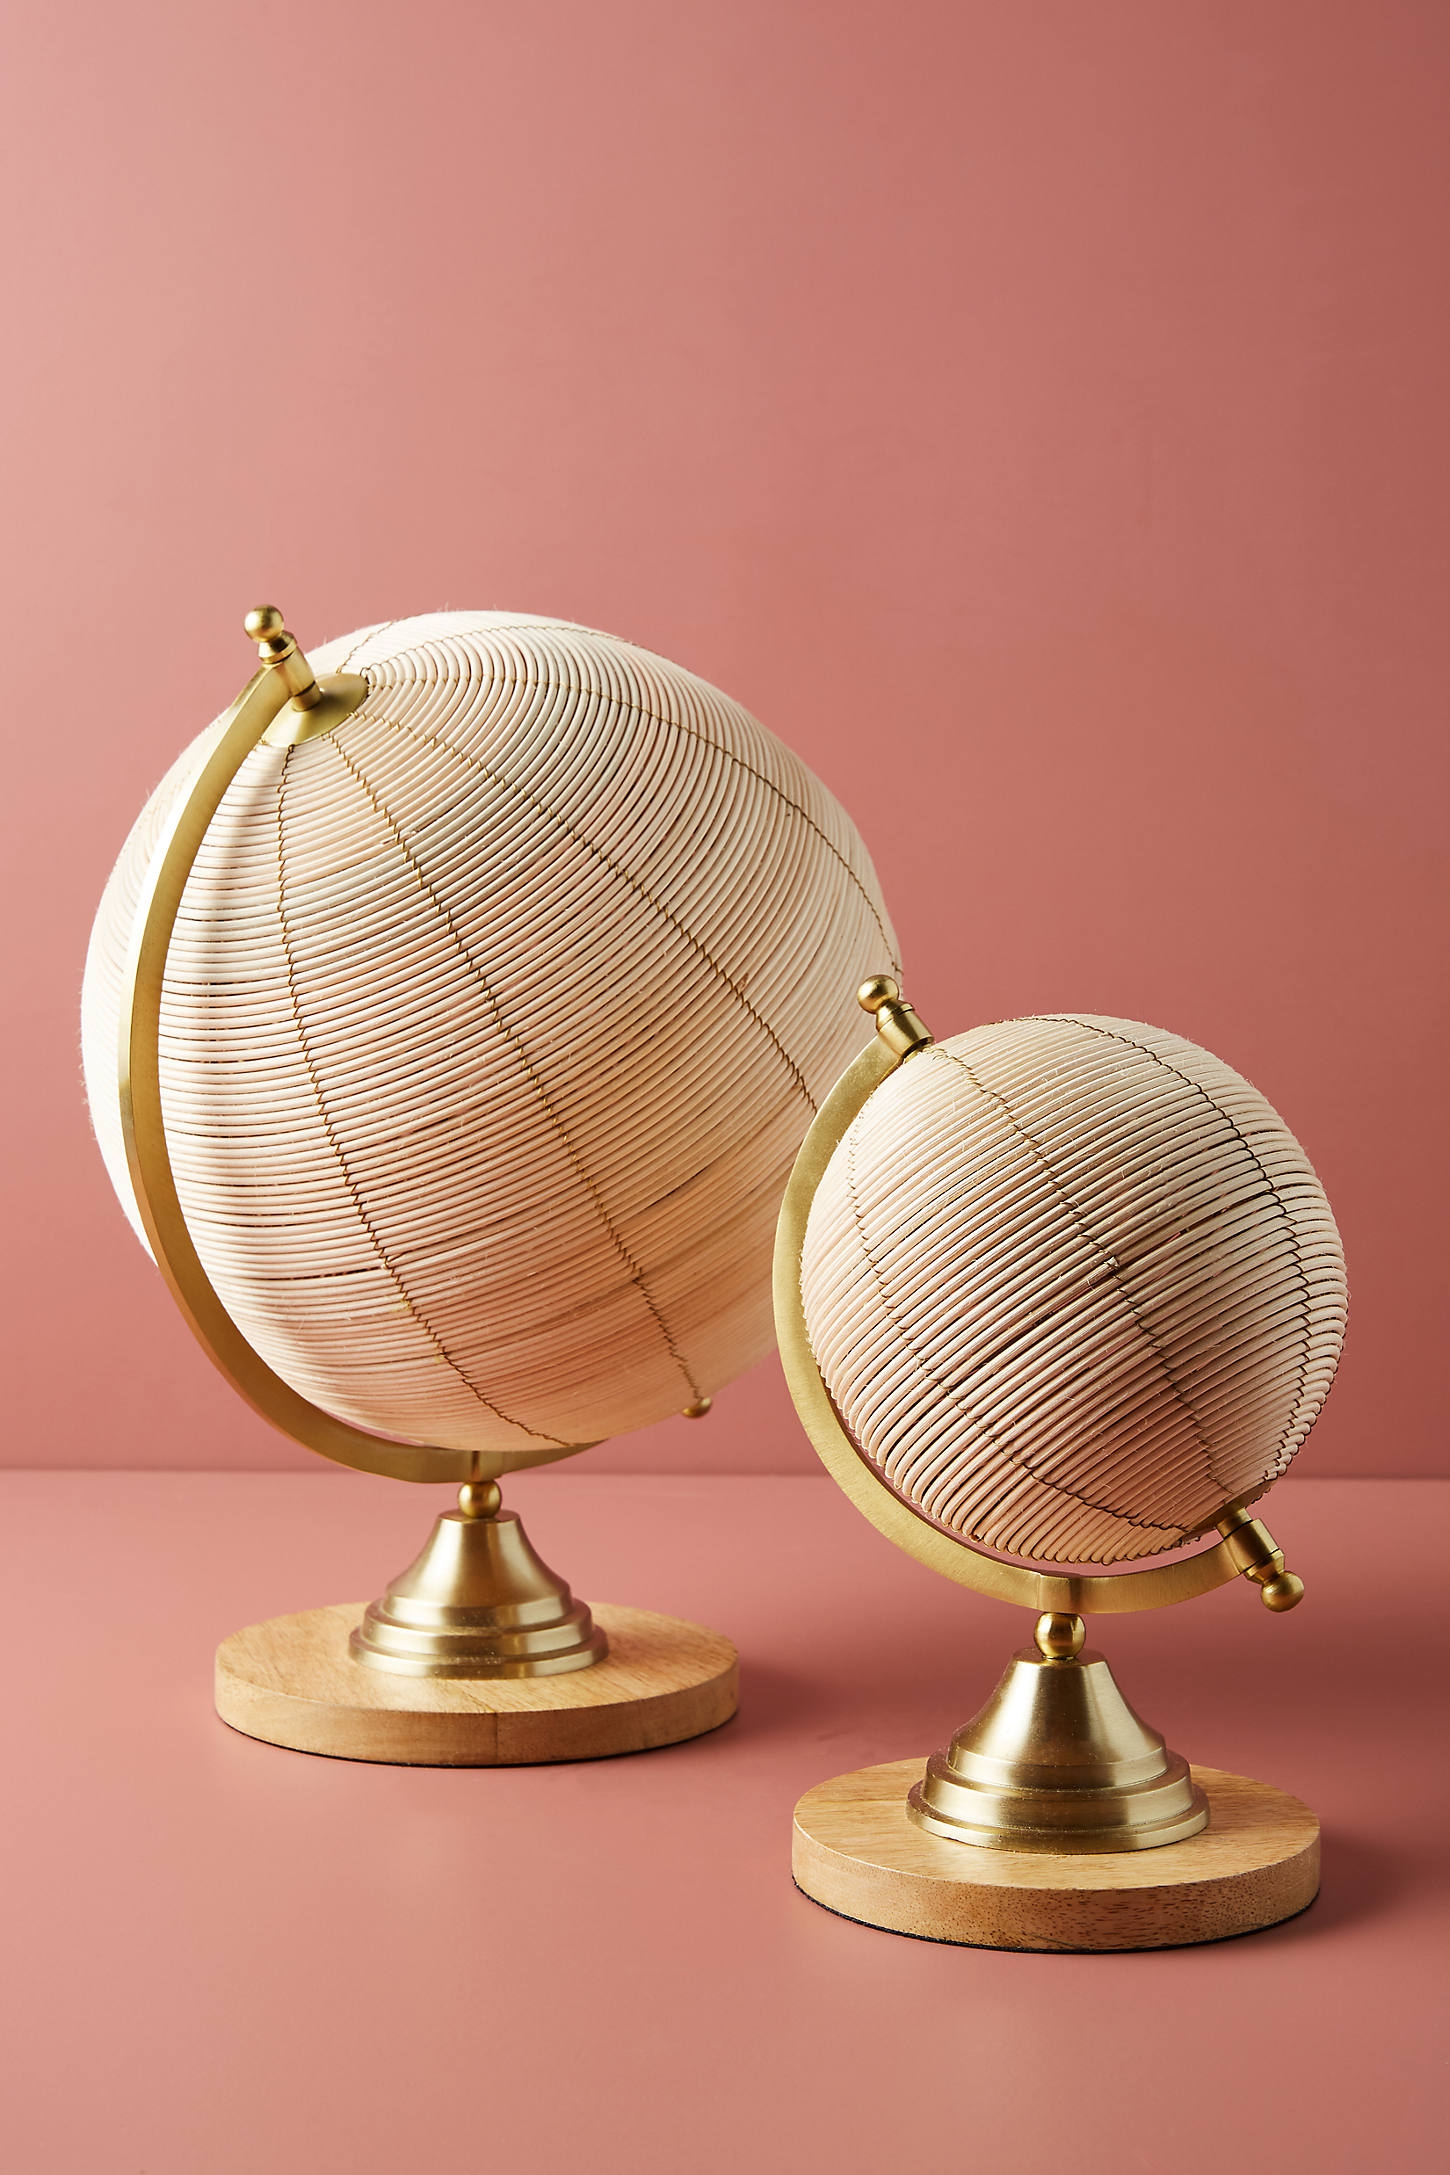 Rattan Globe Decorative Object - Image 0